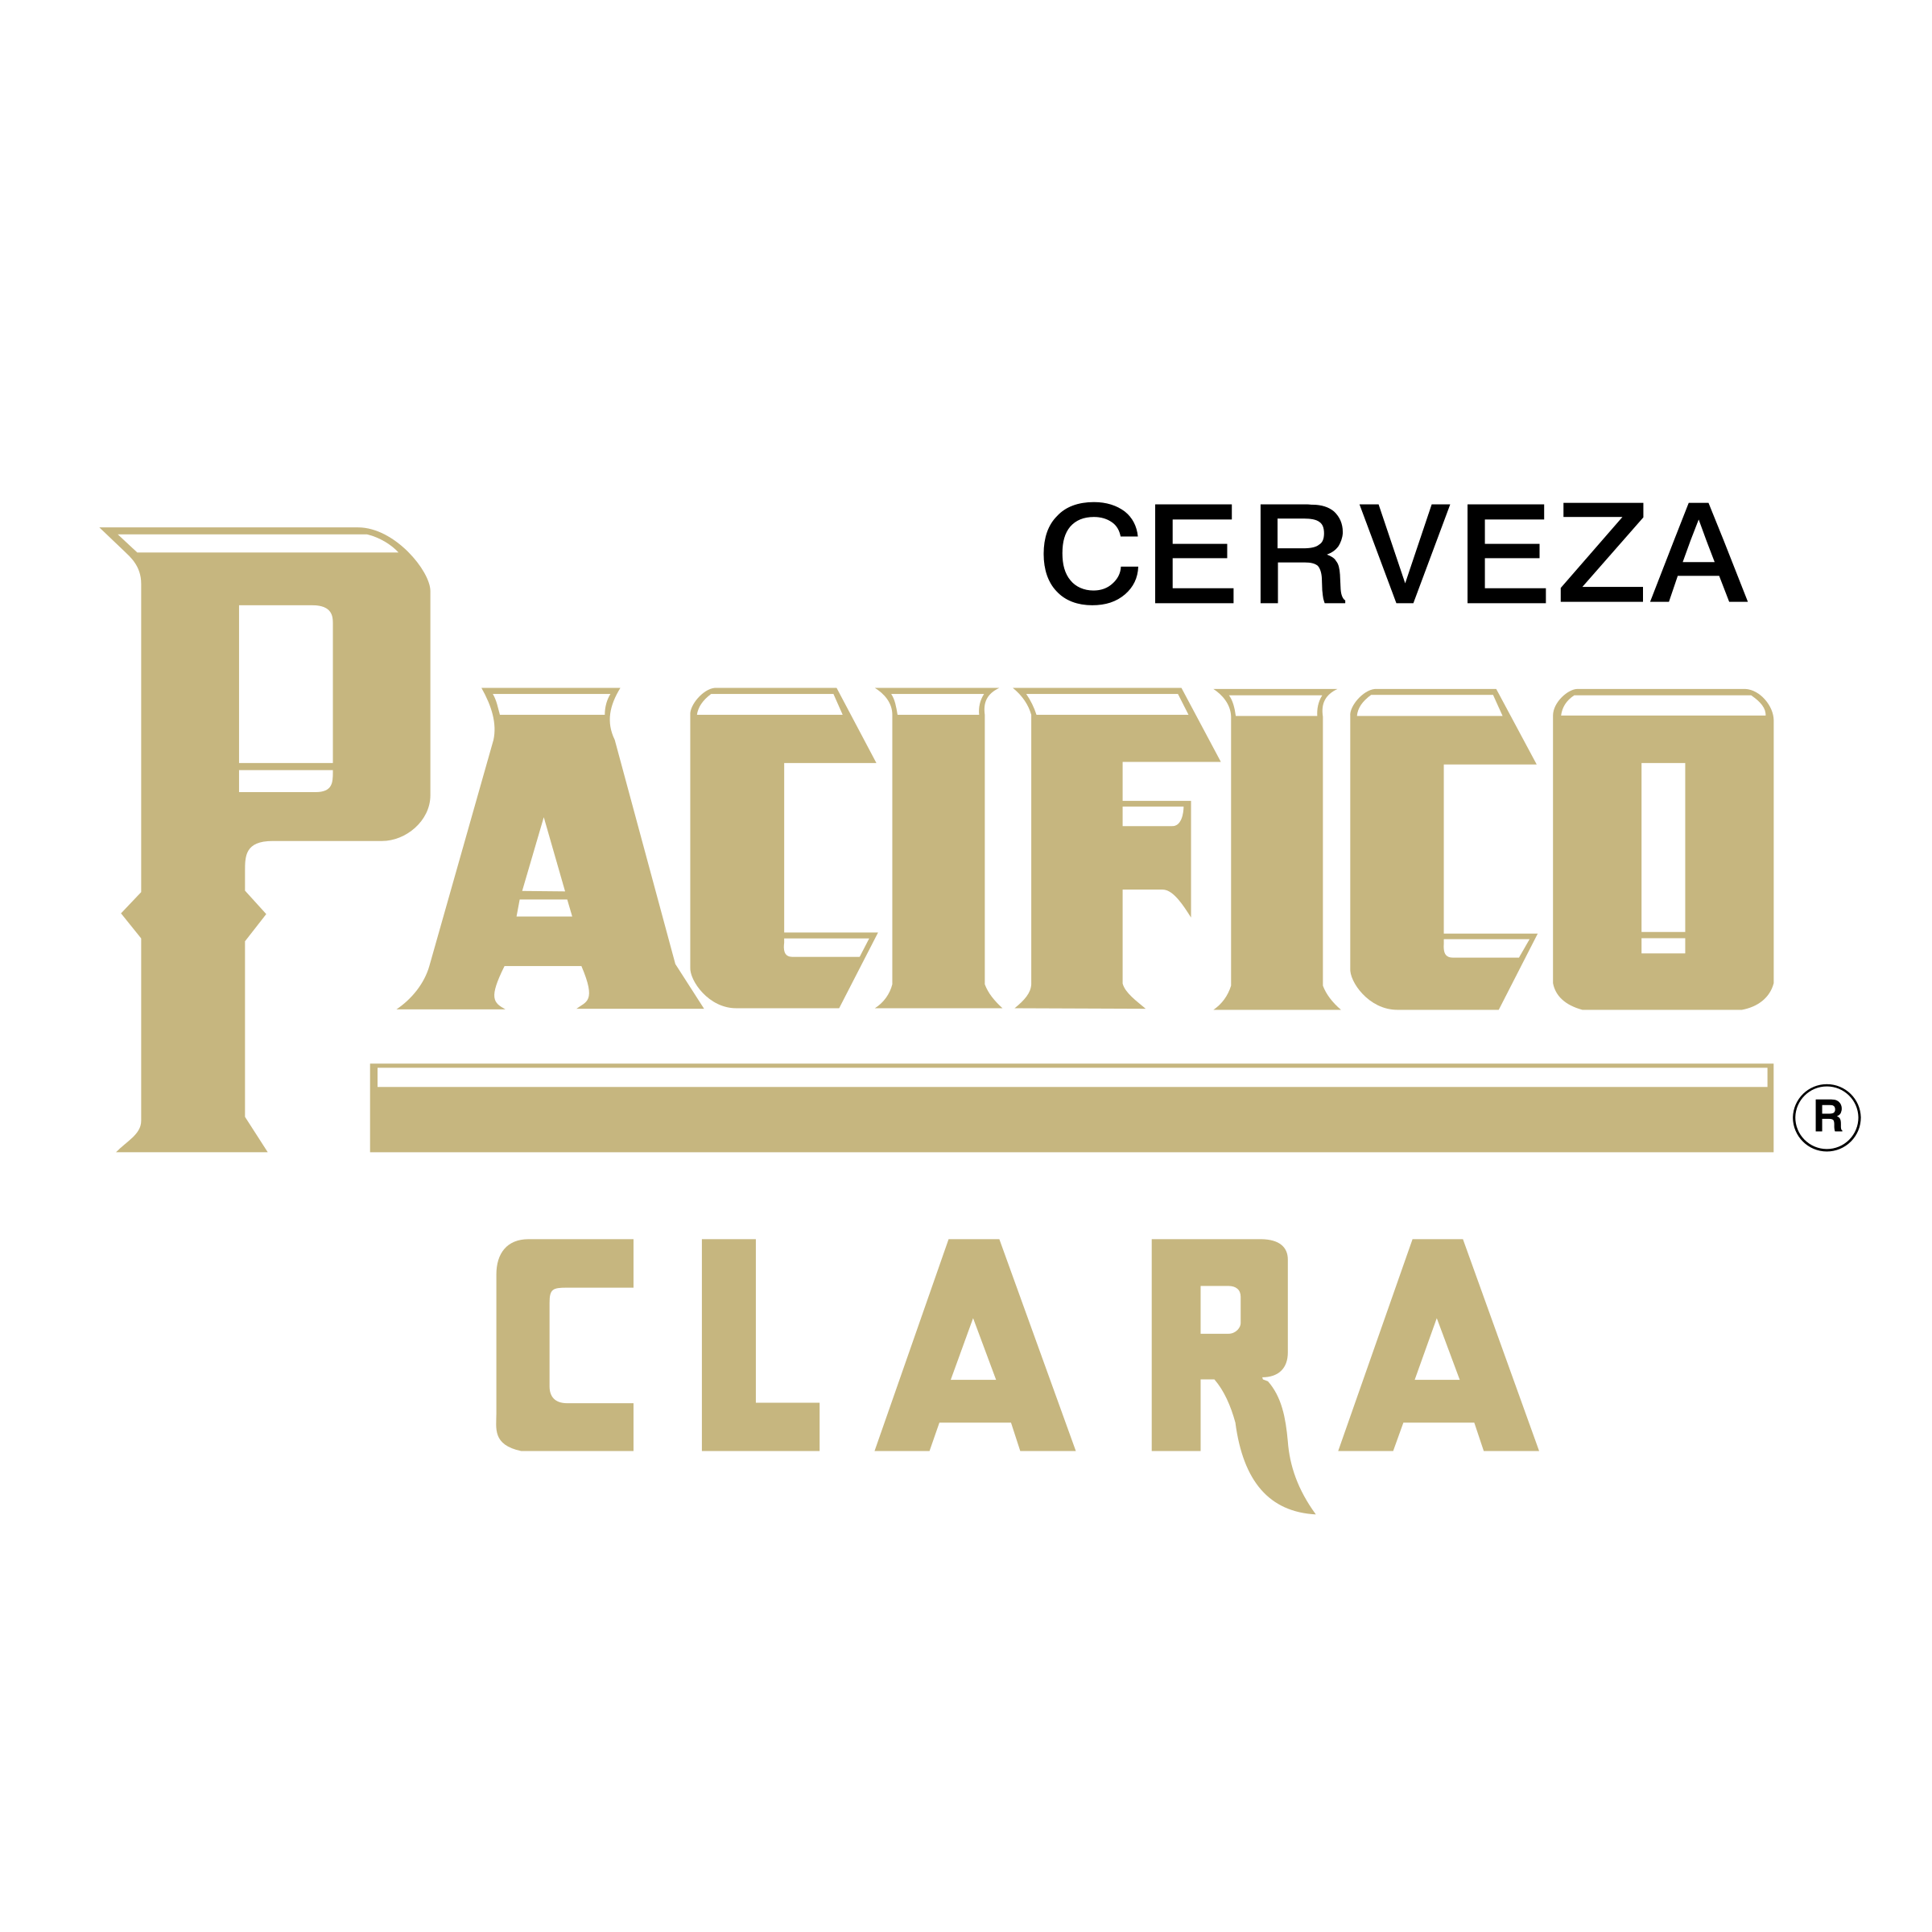 Pacifico Logo - Pacifico Clara Logo PNG Transparent & SVG Vector